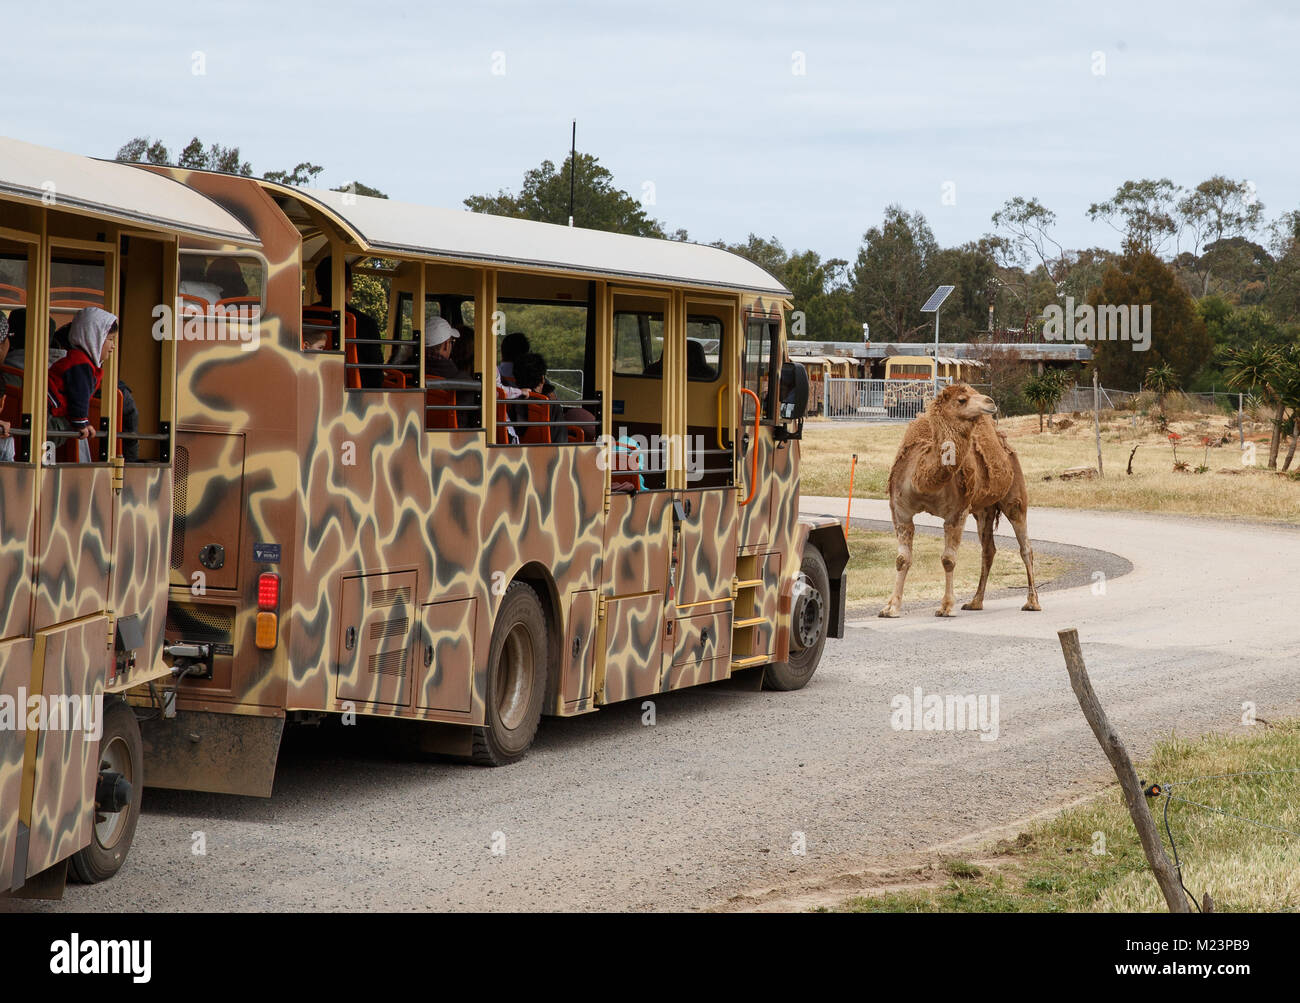 werribee safari bus